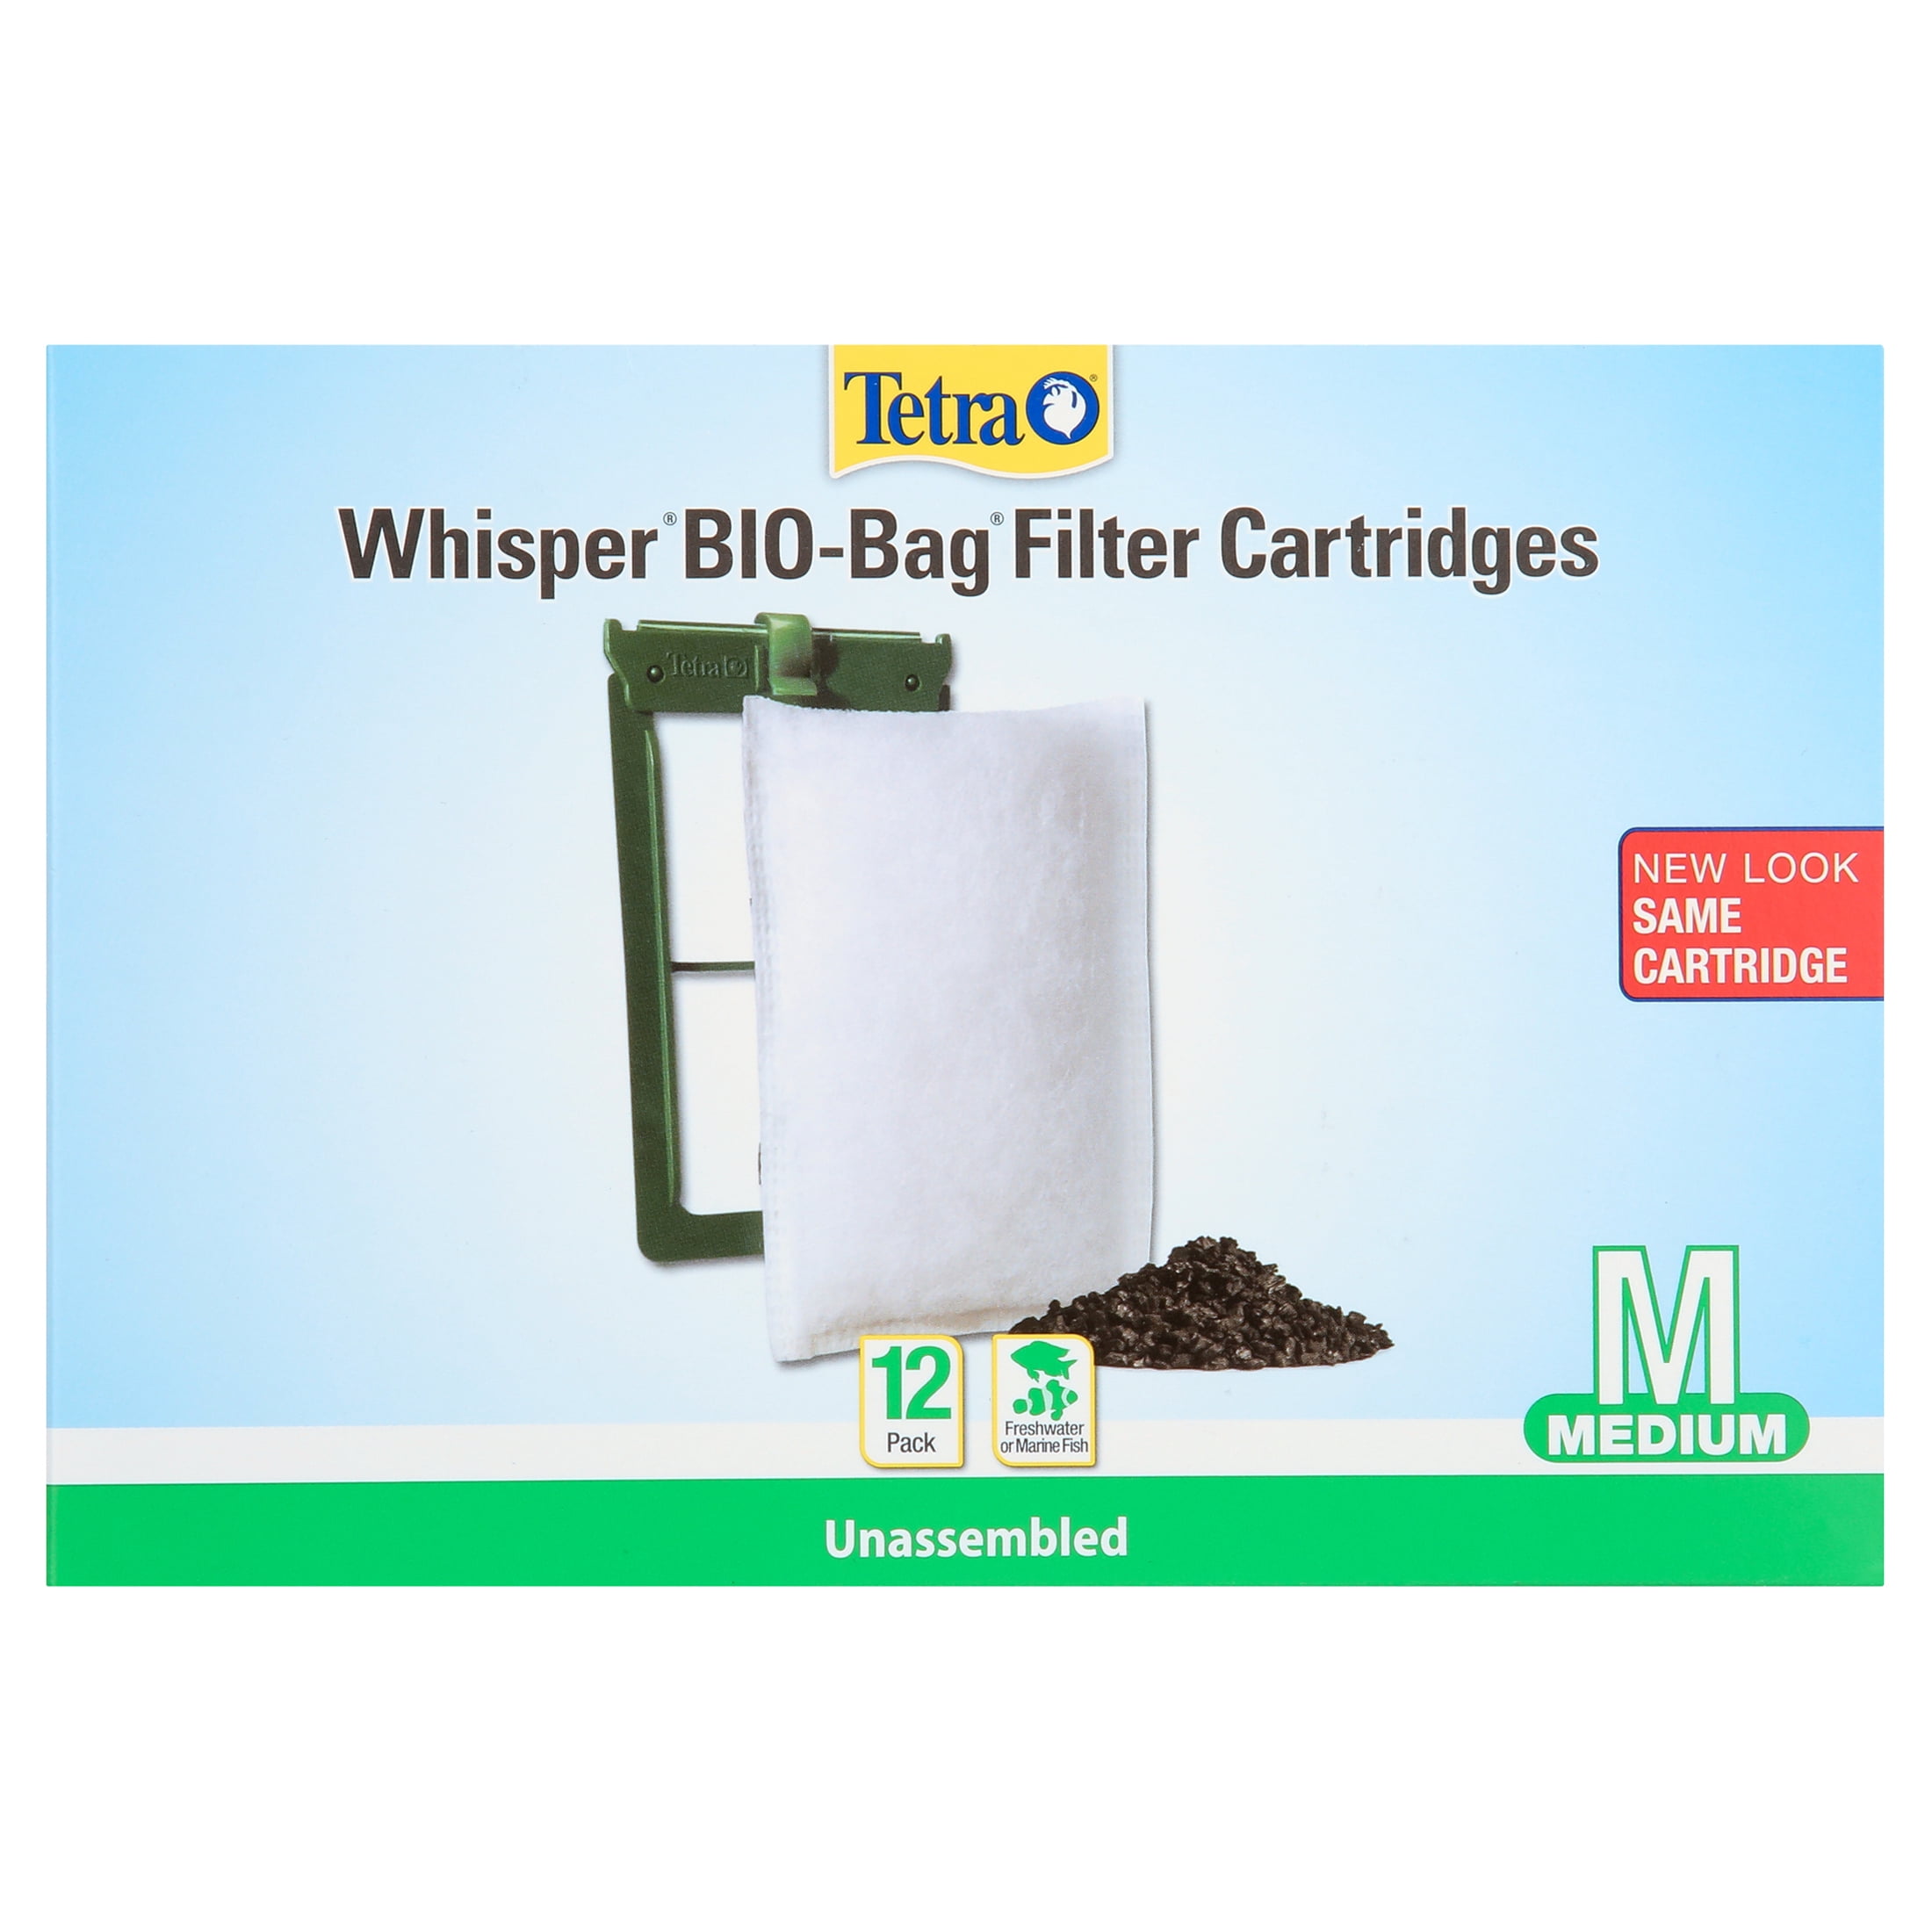 Tetra Whisper Bio-Bag Disposable Filter Cartridges 3 Count, for Aquariums,  Medium - Walmart.com